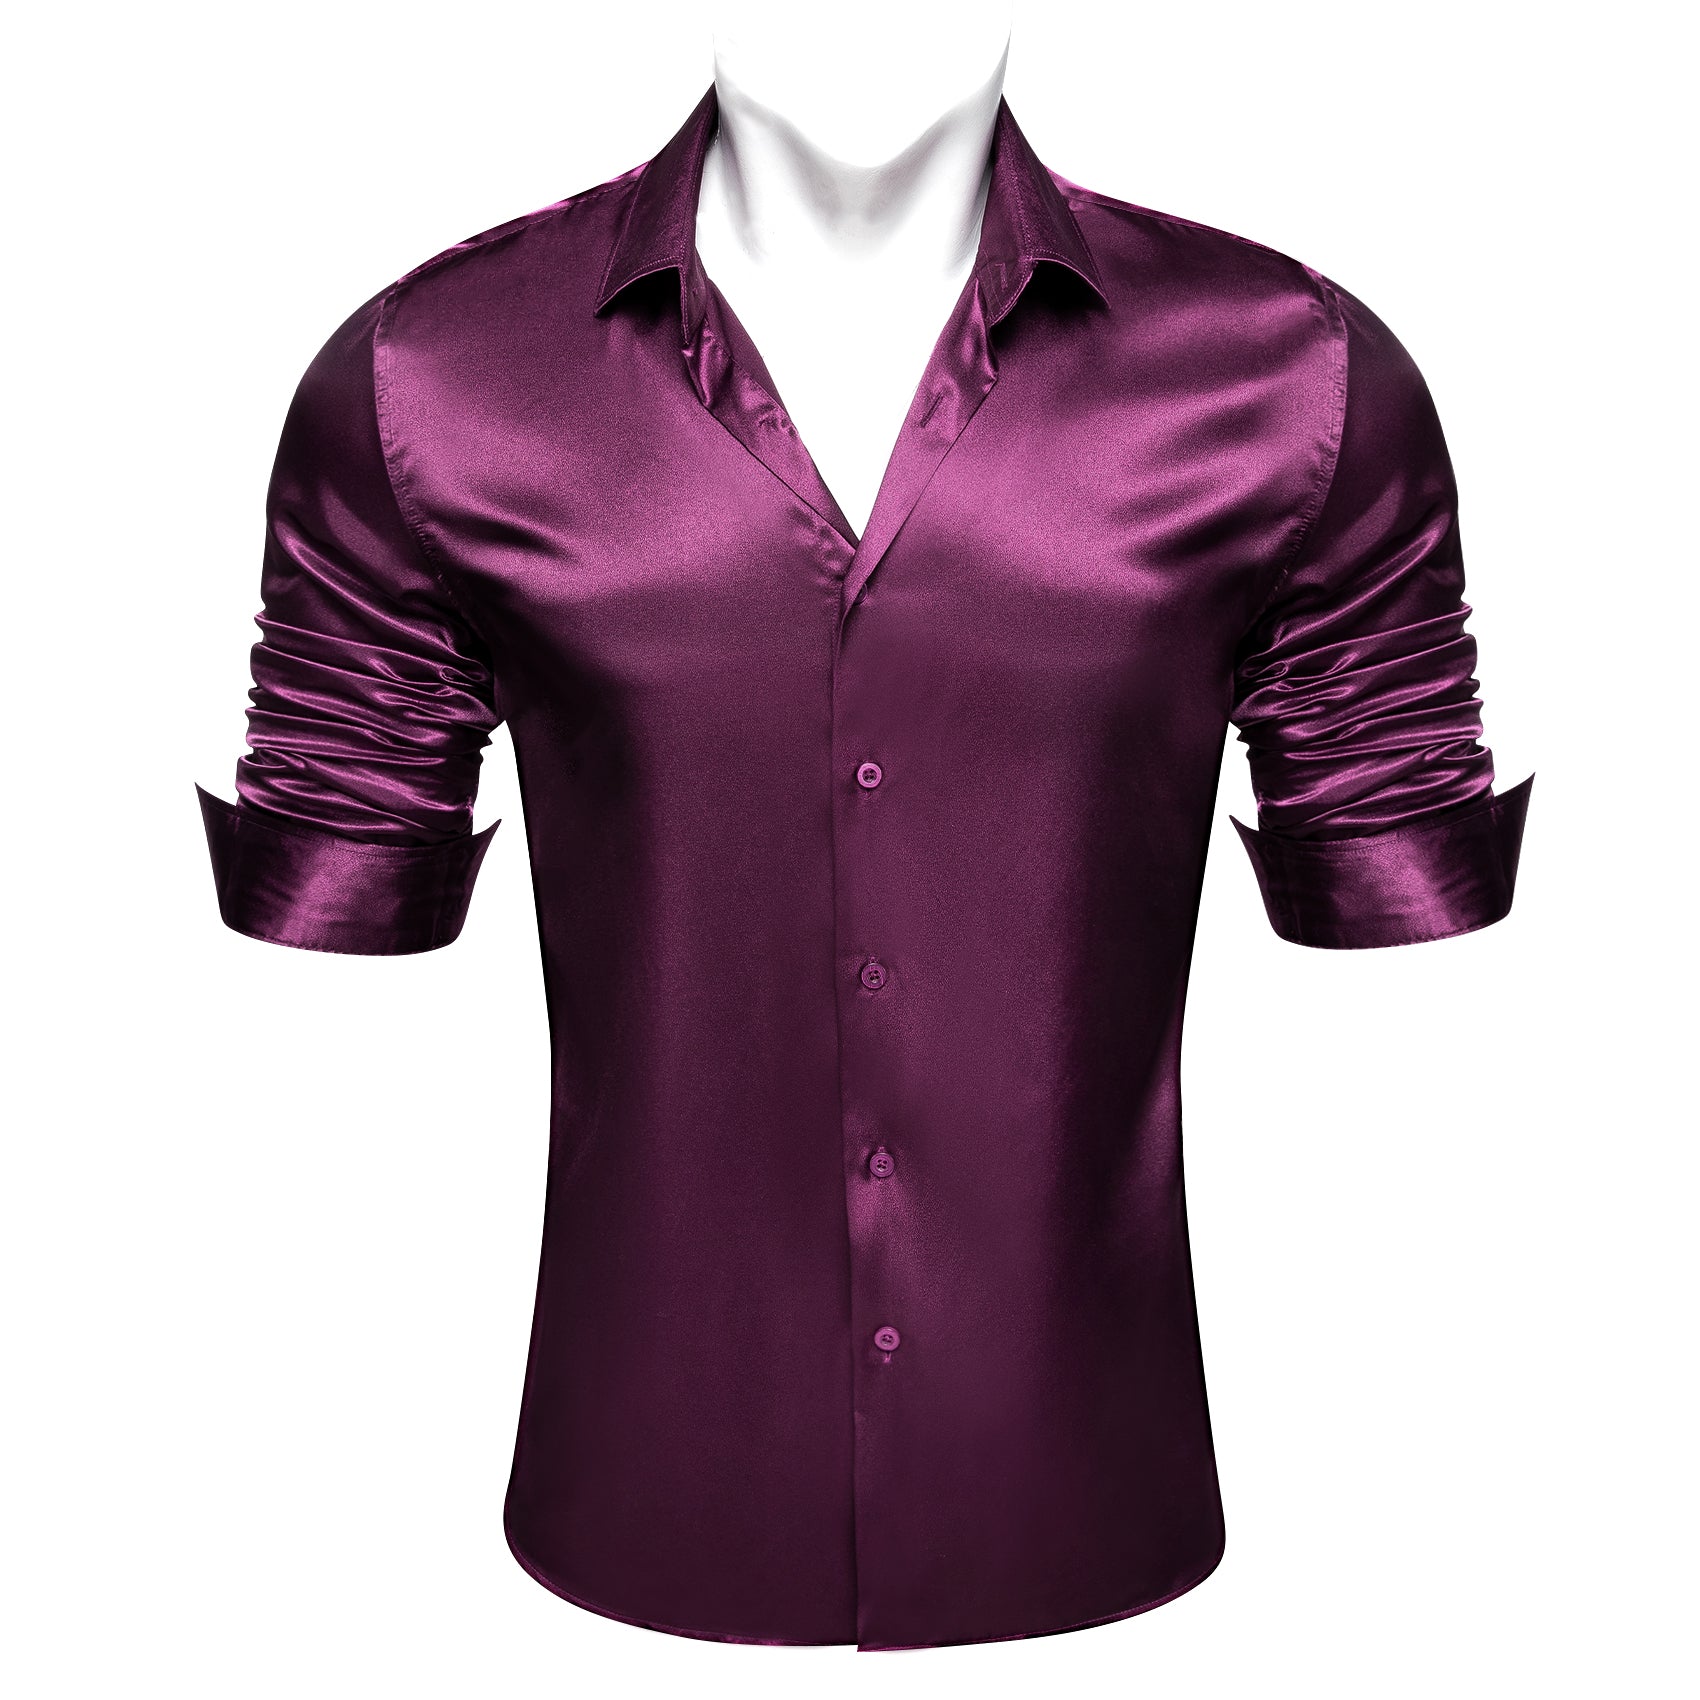 Barry.wang New Purple Solid Silk Shirt